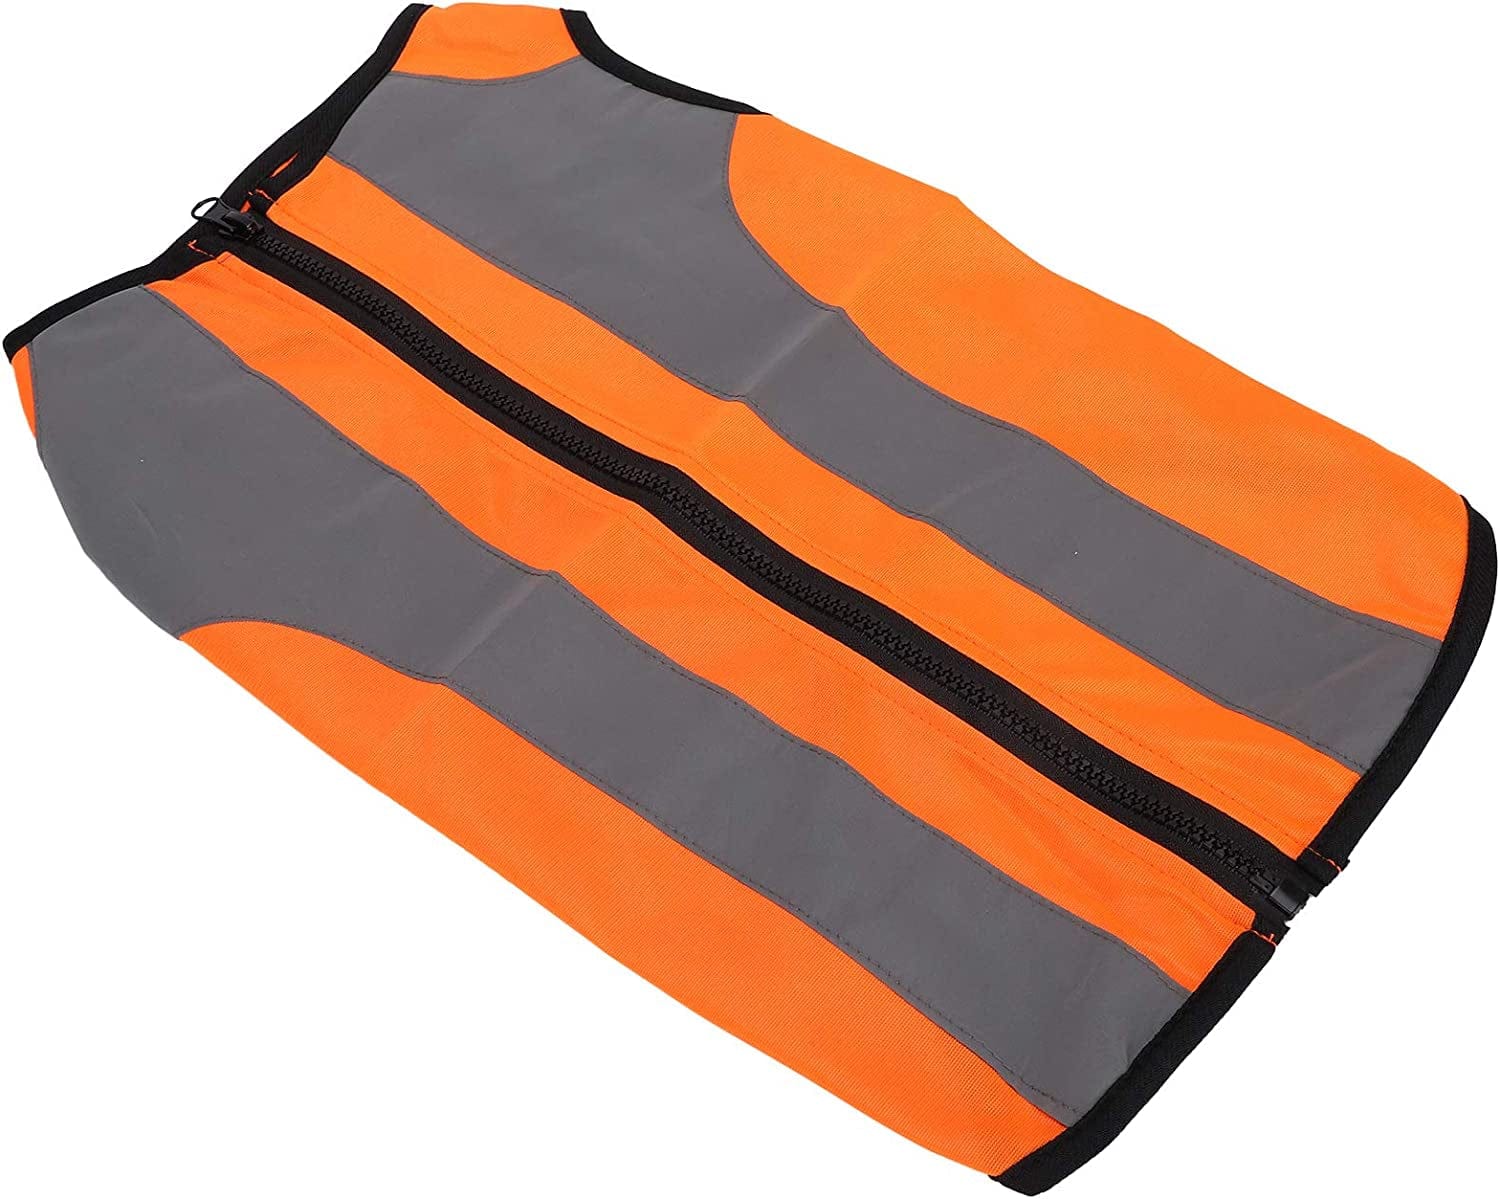 Reflective Safety Vest - Orange